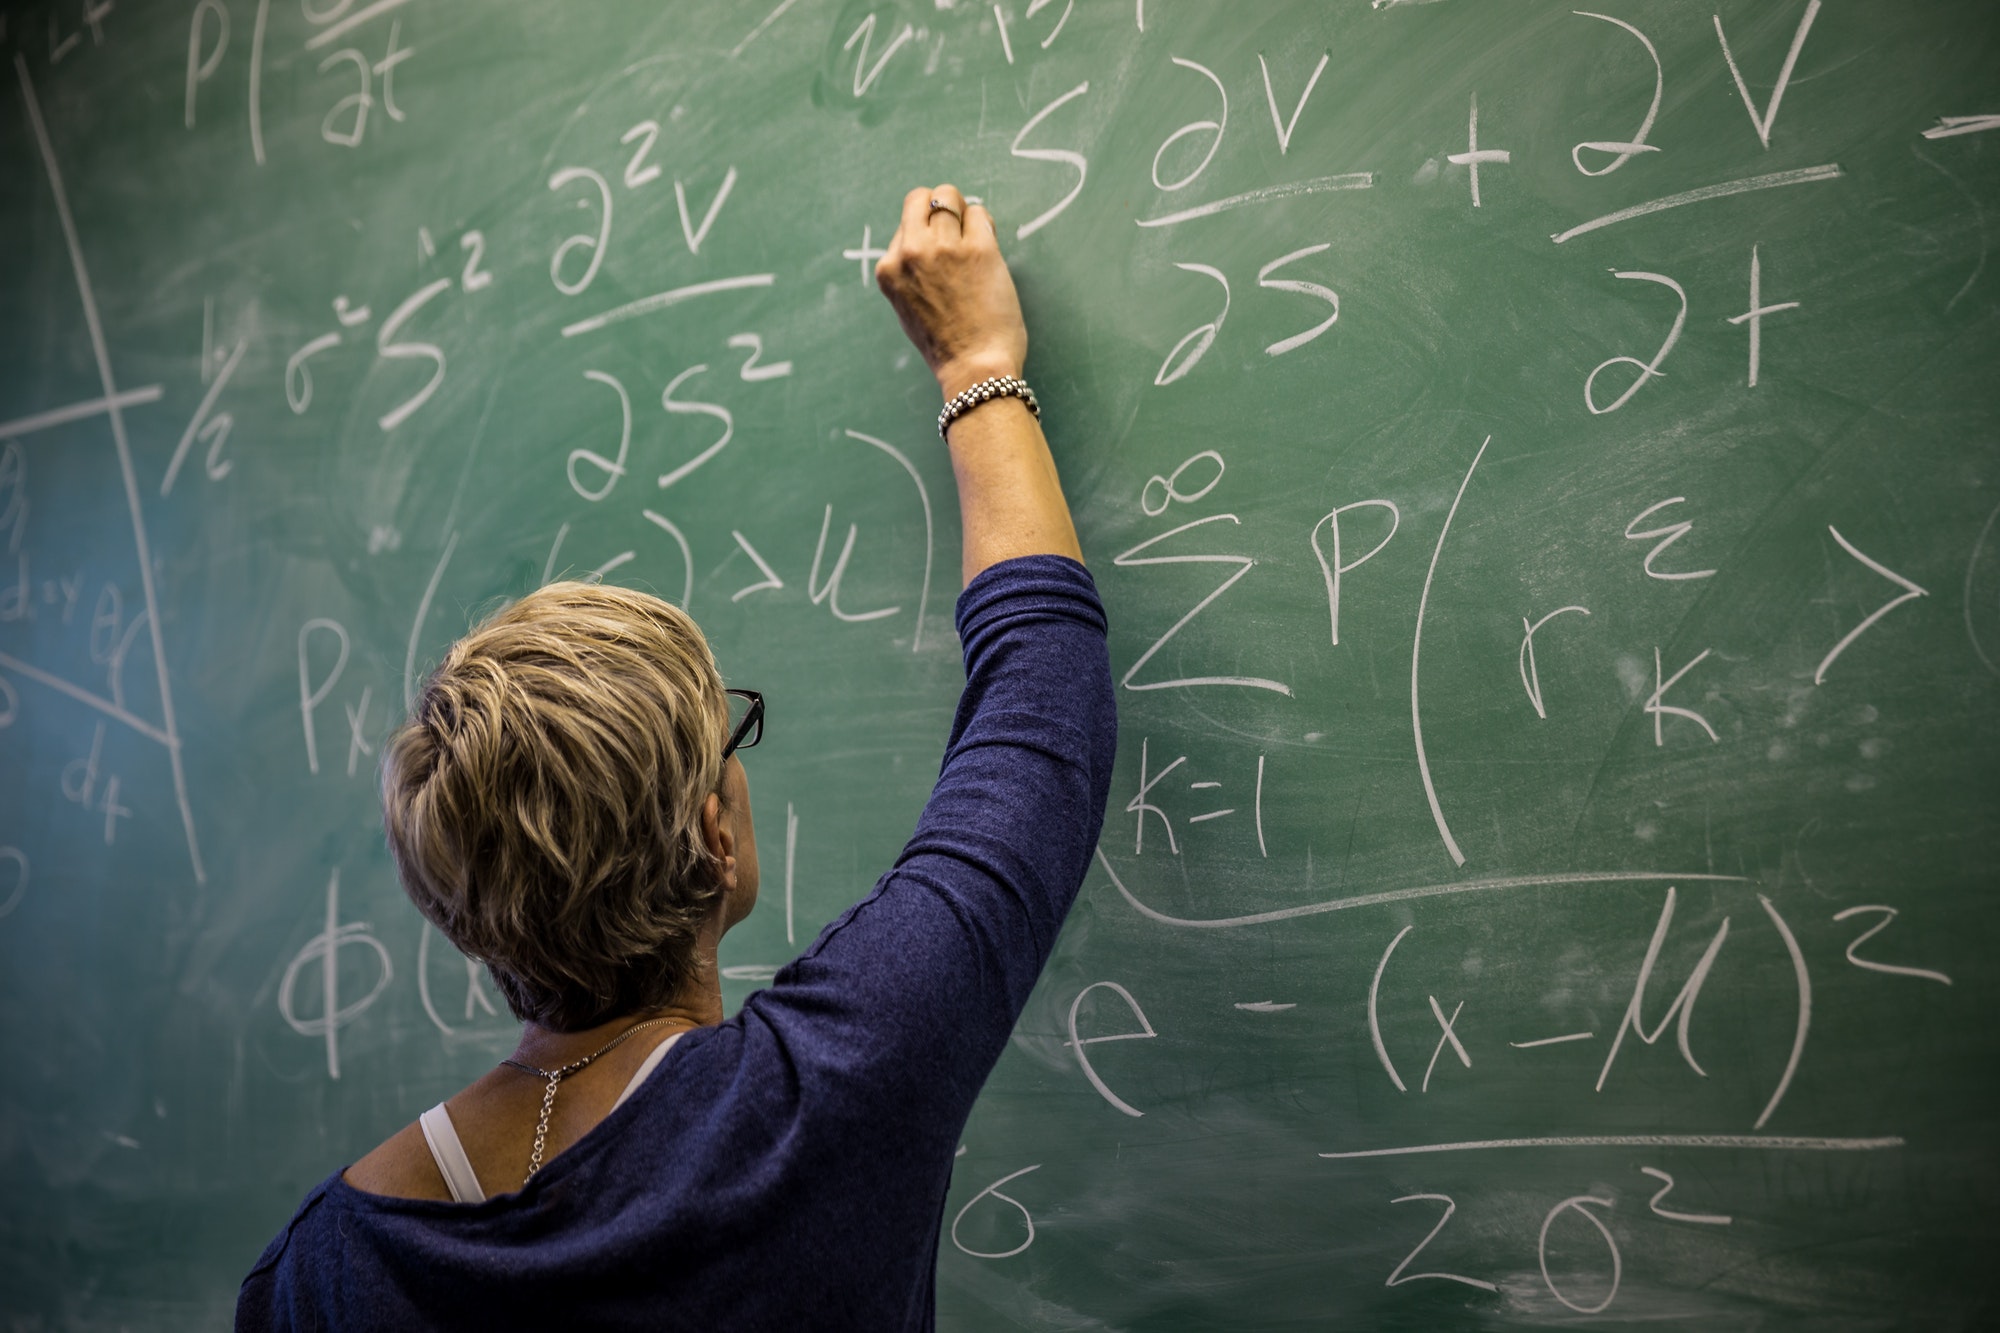 Master teacher at work teaching math on green chalkboard